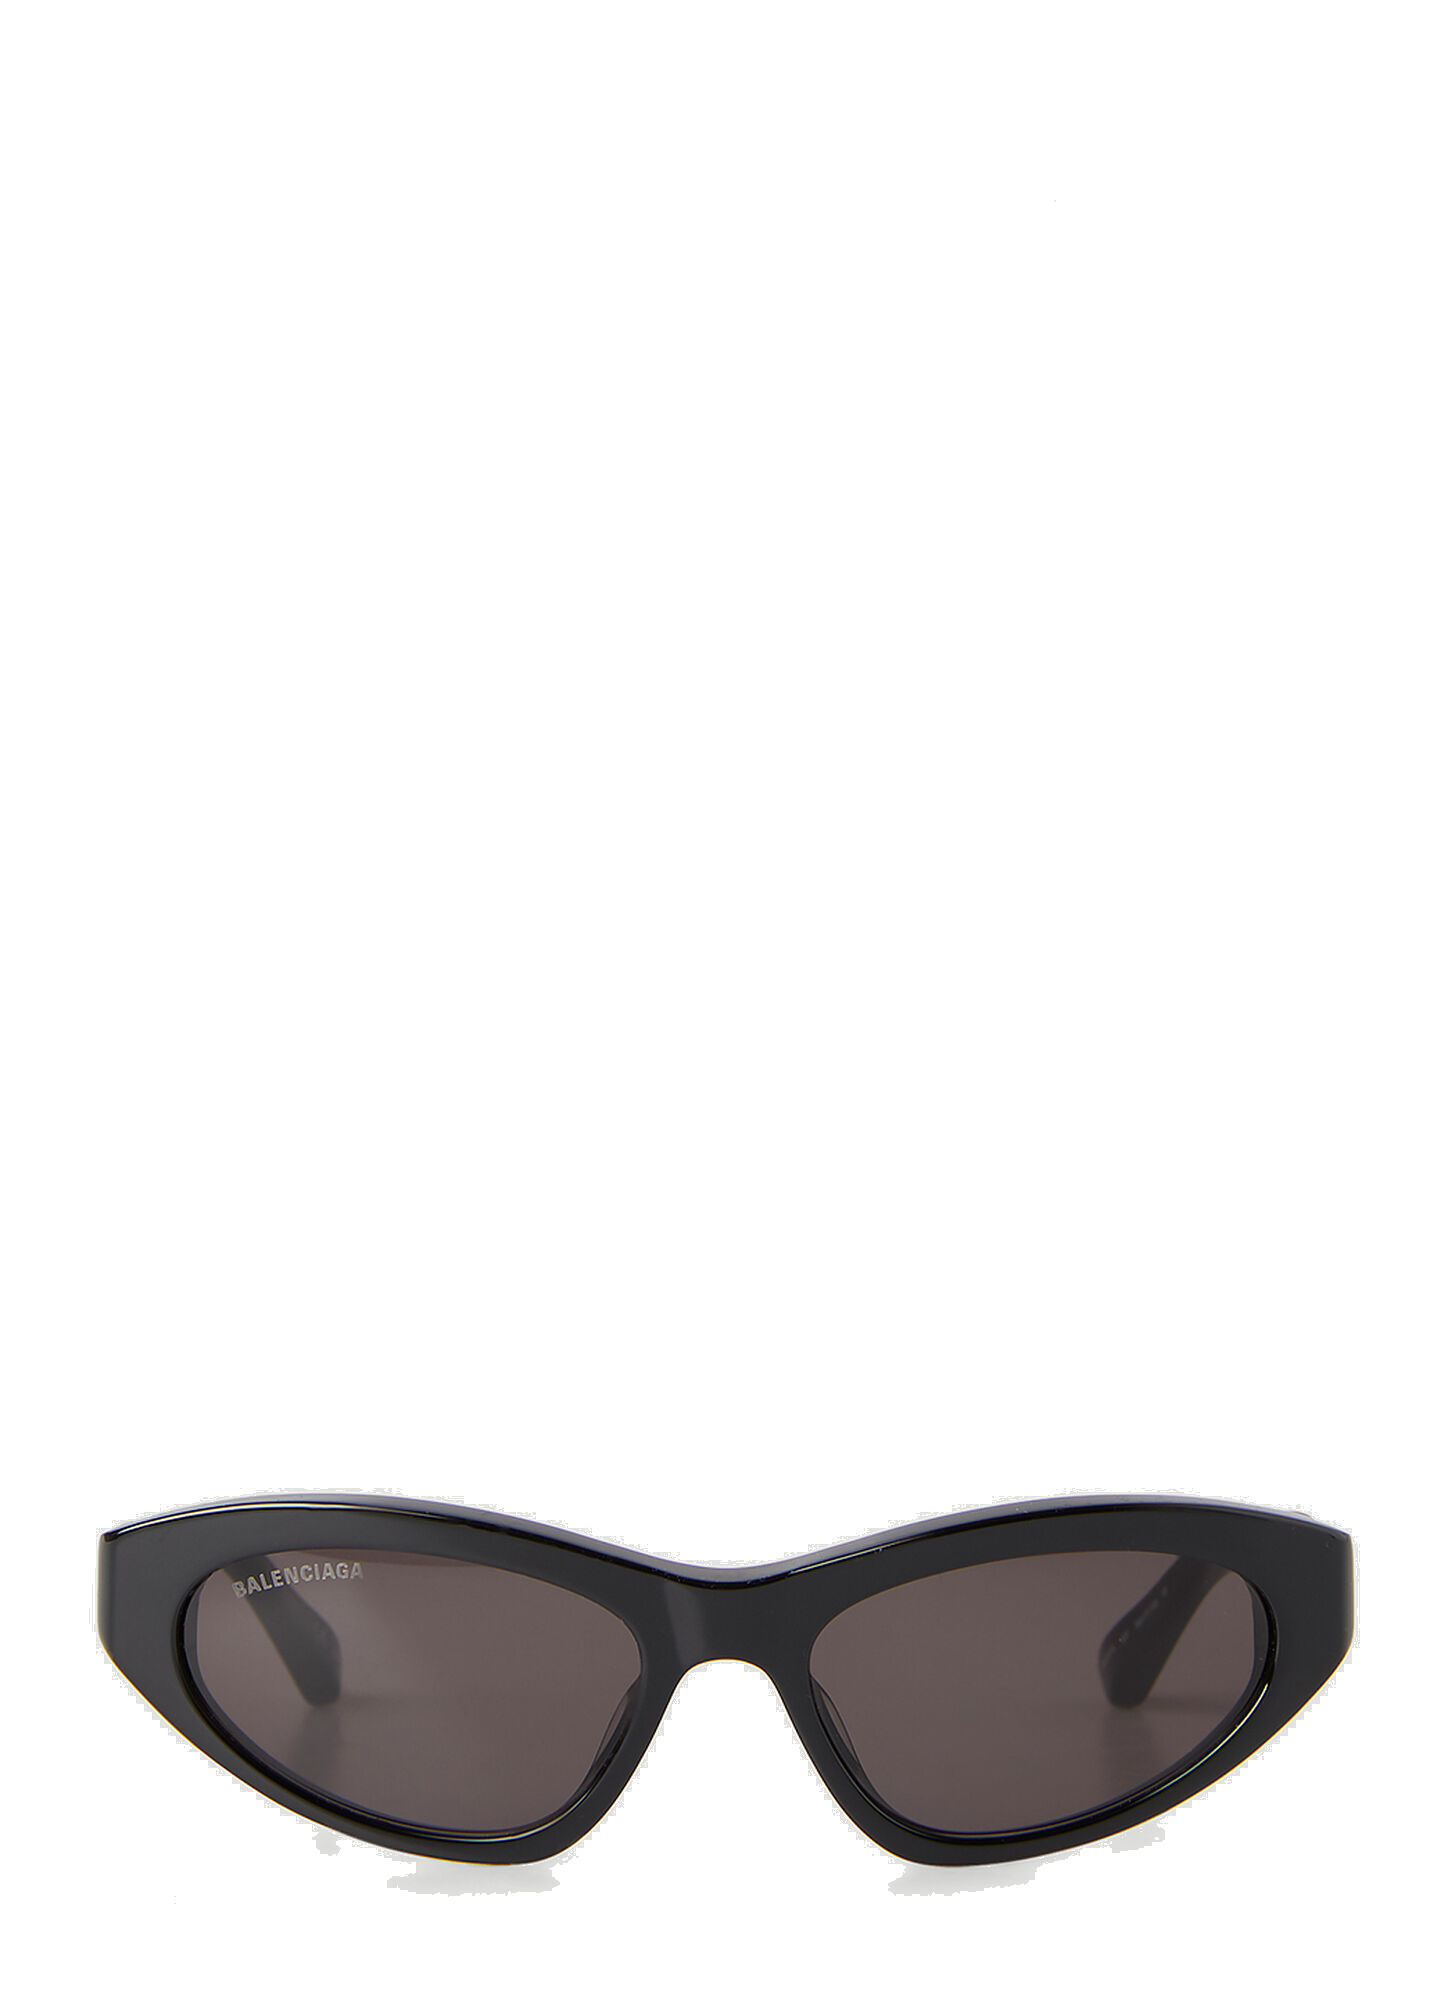 Twisted Arm Sunglasses in Black Balenciaga